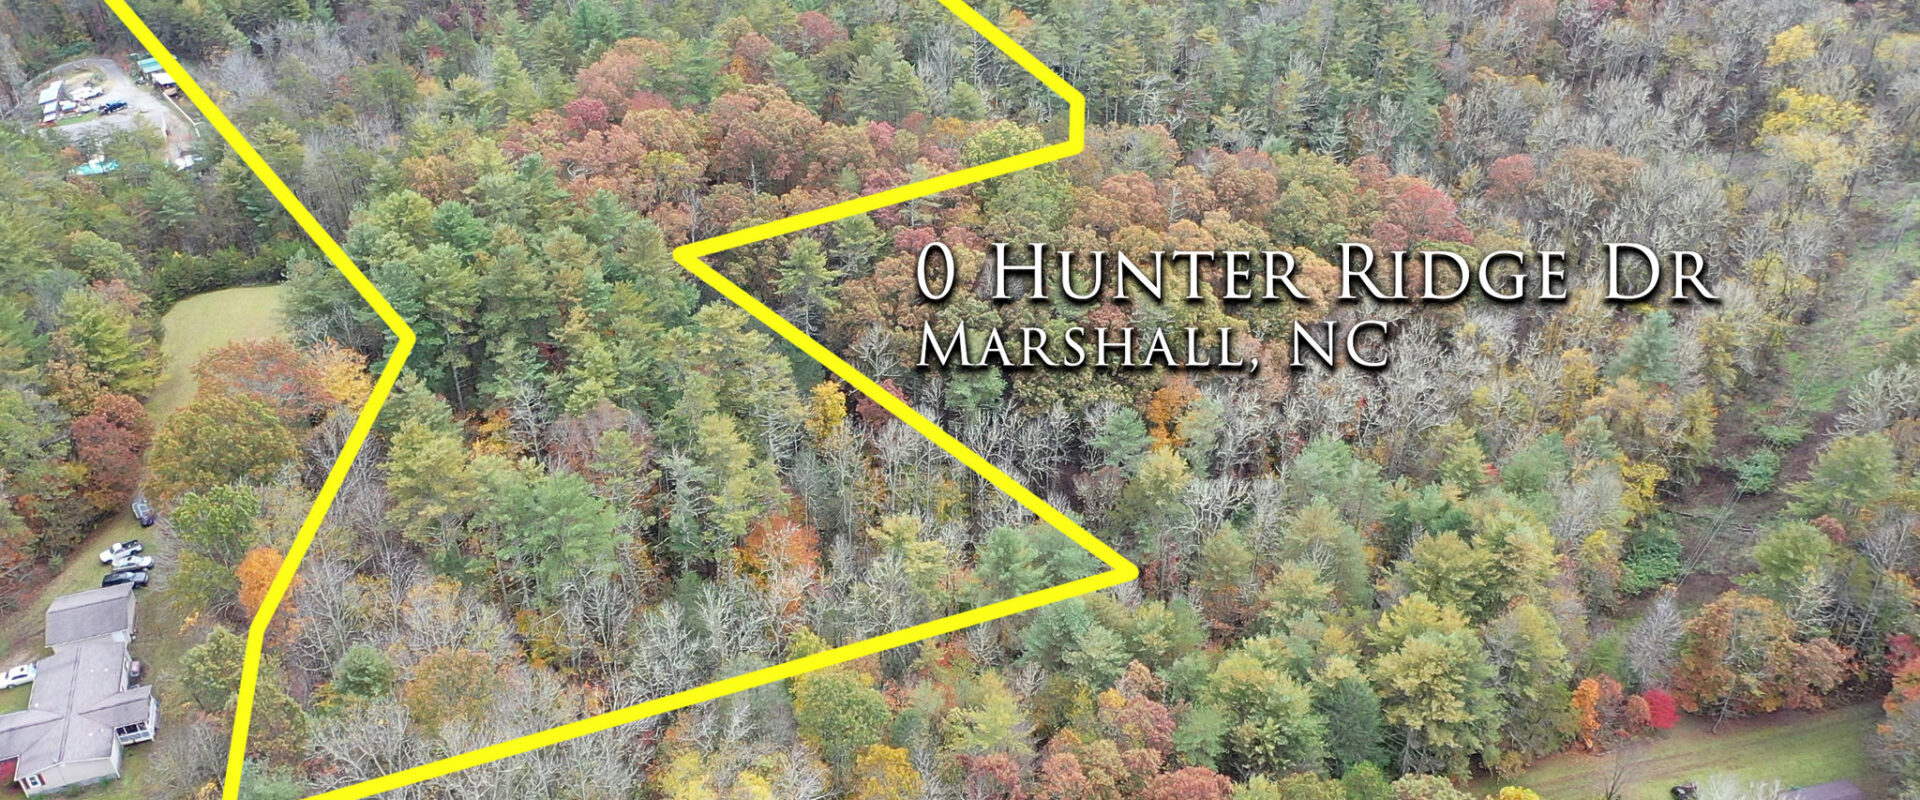 0 Hunter Ridge Rd Marshall NC